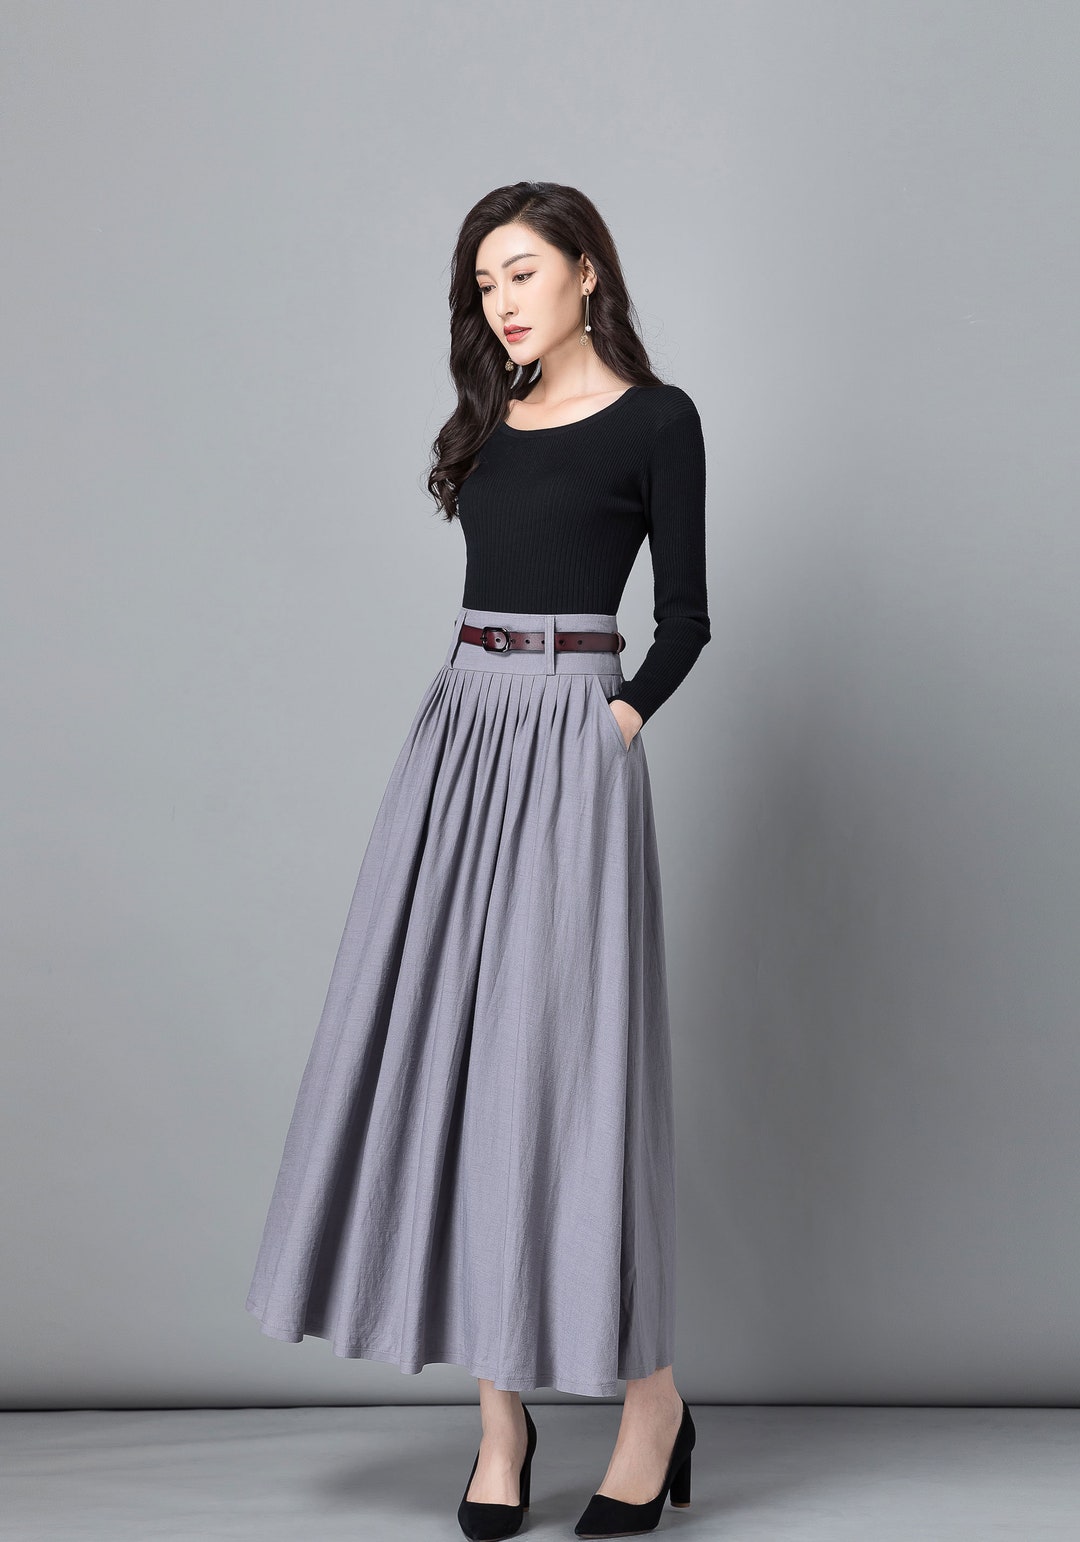 Gray Linen Skirt Maxi Skirt With Pockets A Line Long Skirt - Etsy